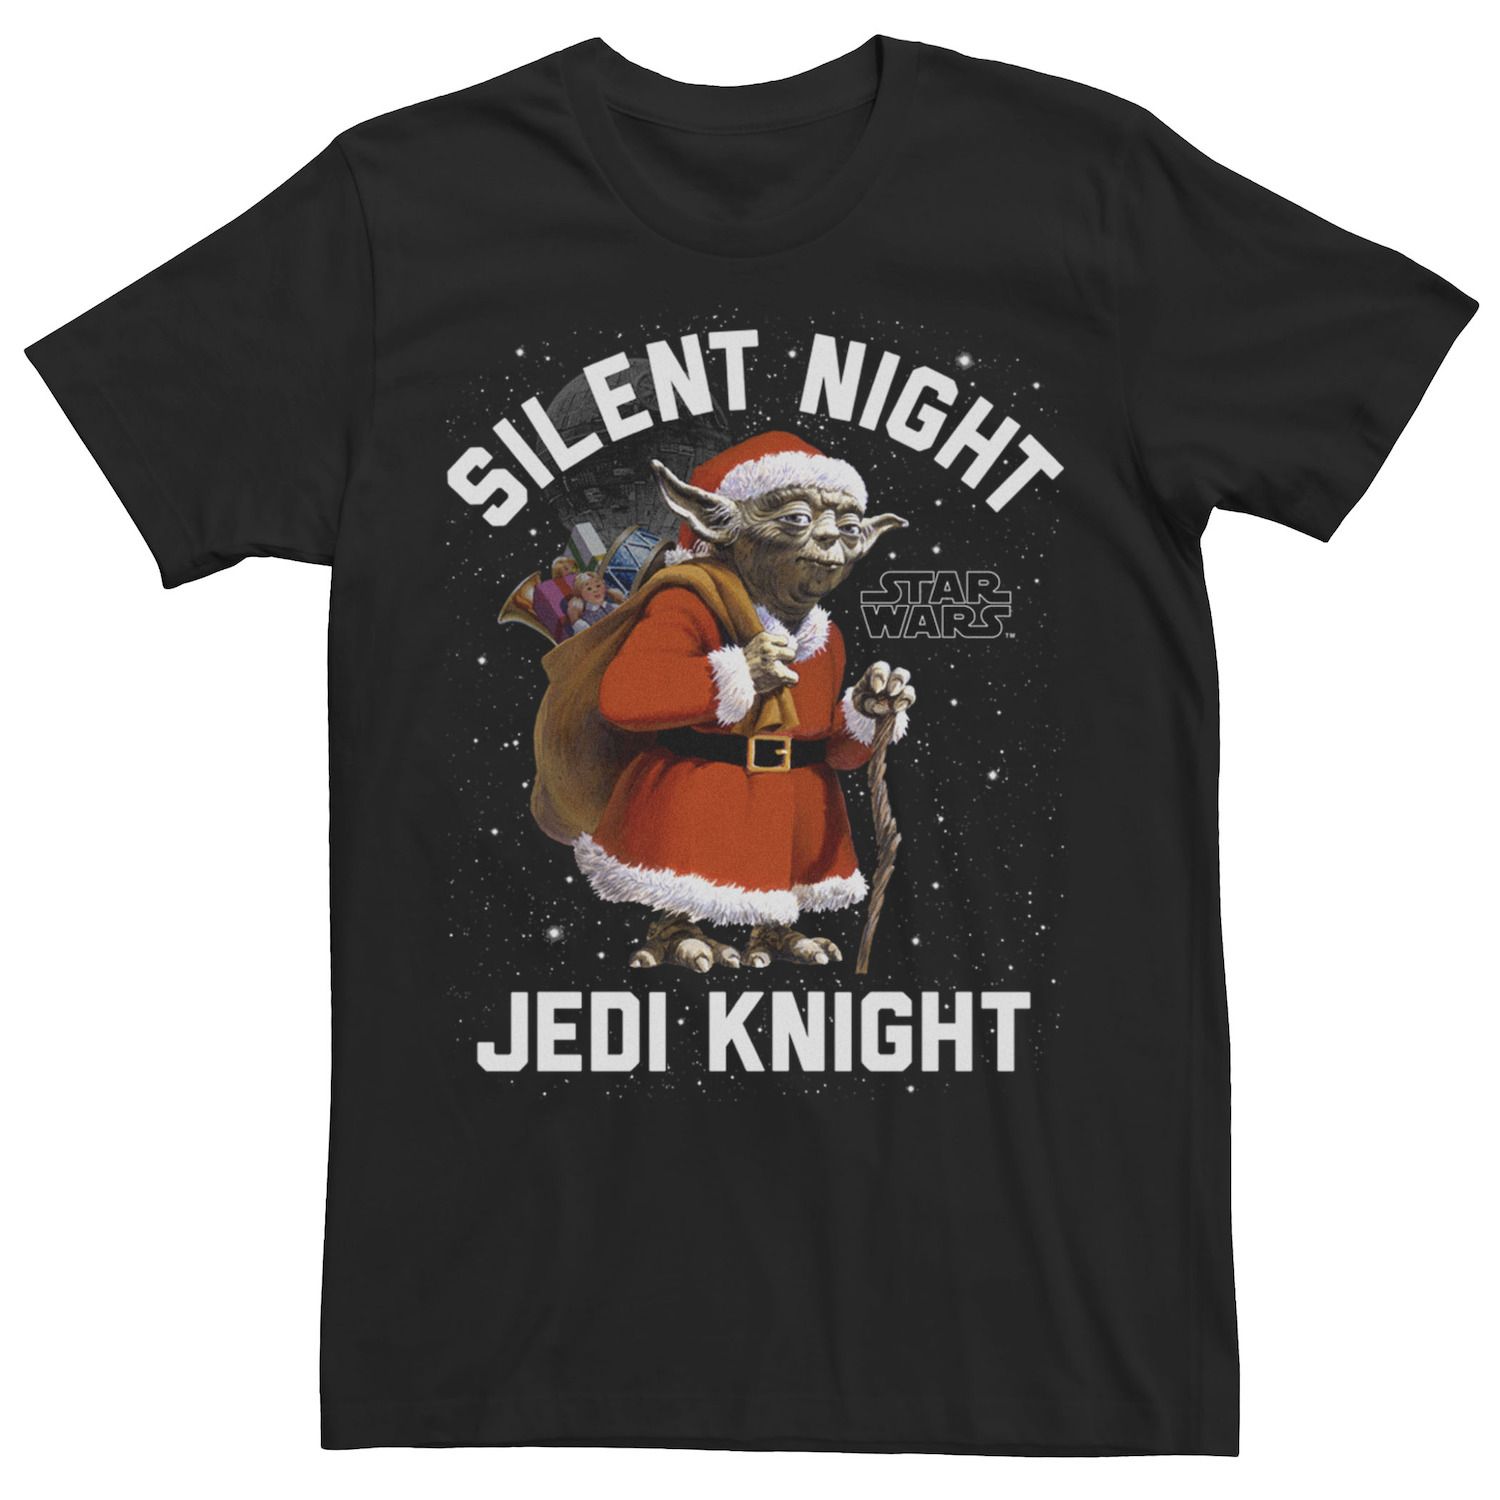 Мужская футболка Santa Yoda Silent Night Jedi Knight Star Wars star wars movie stockings master yoda r2 d2 socks wookiee jedi knight novelty men